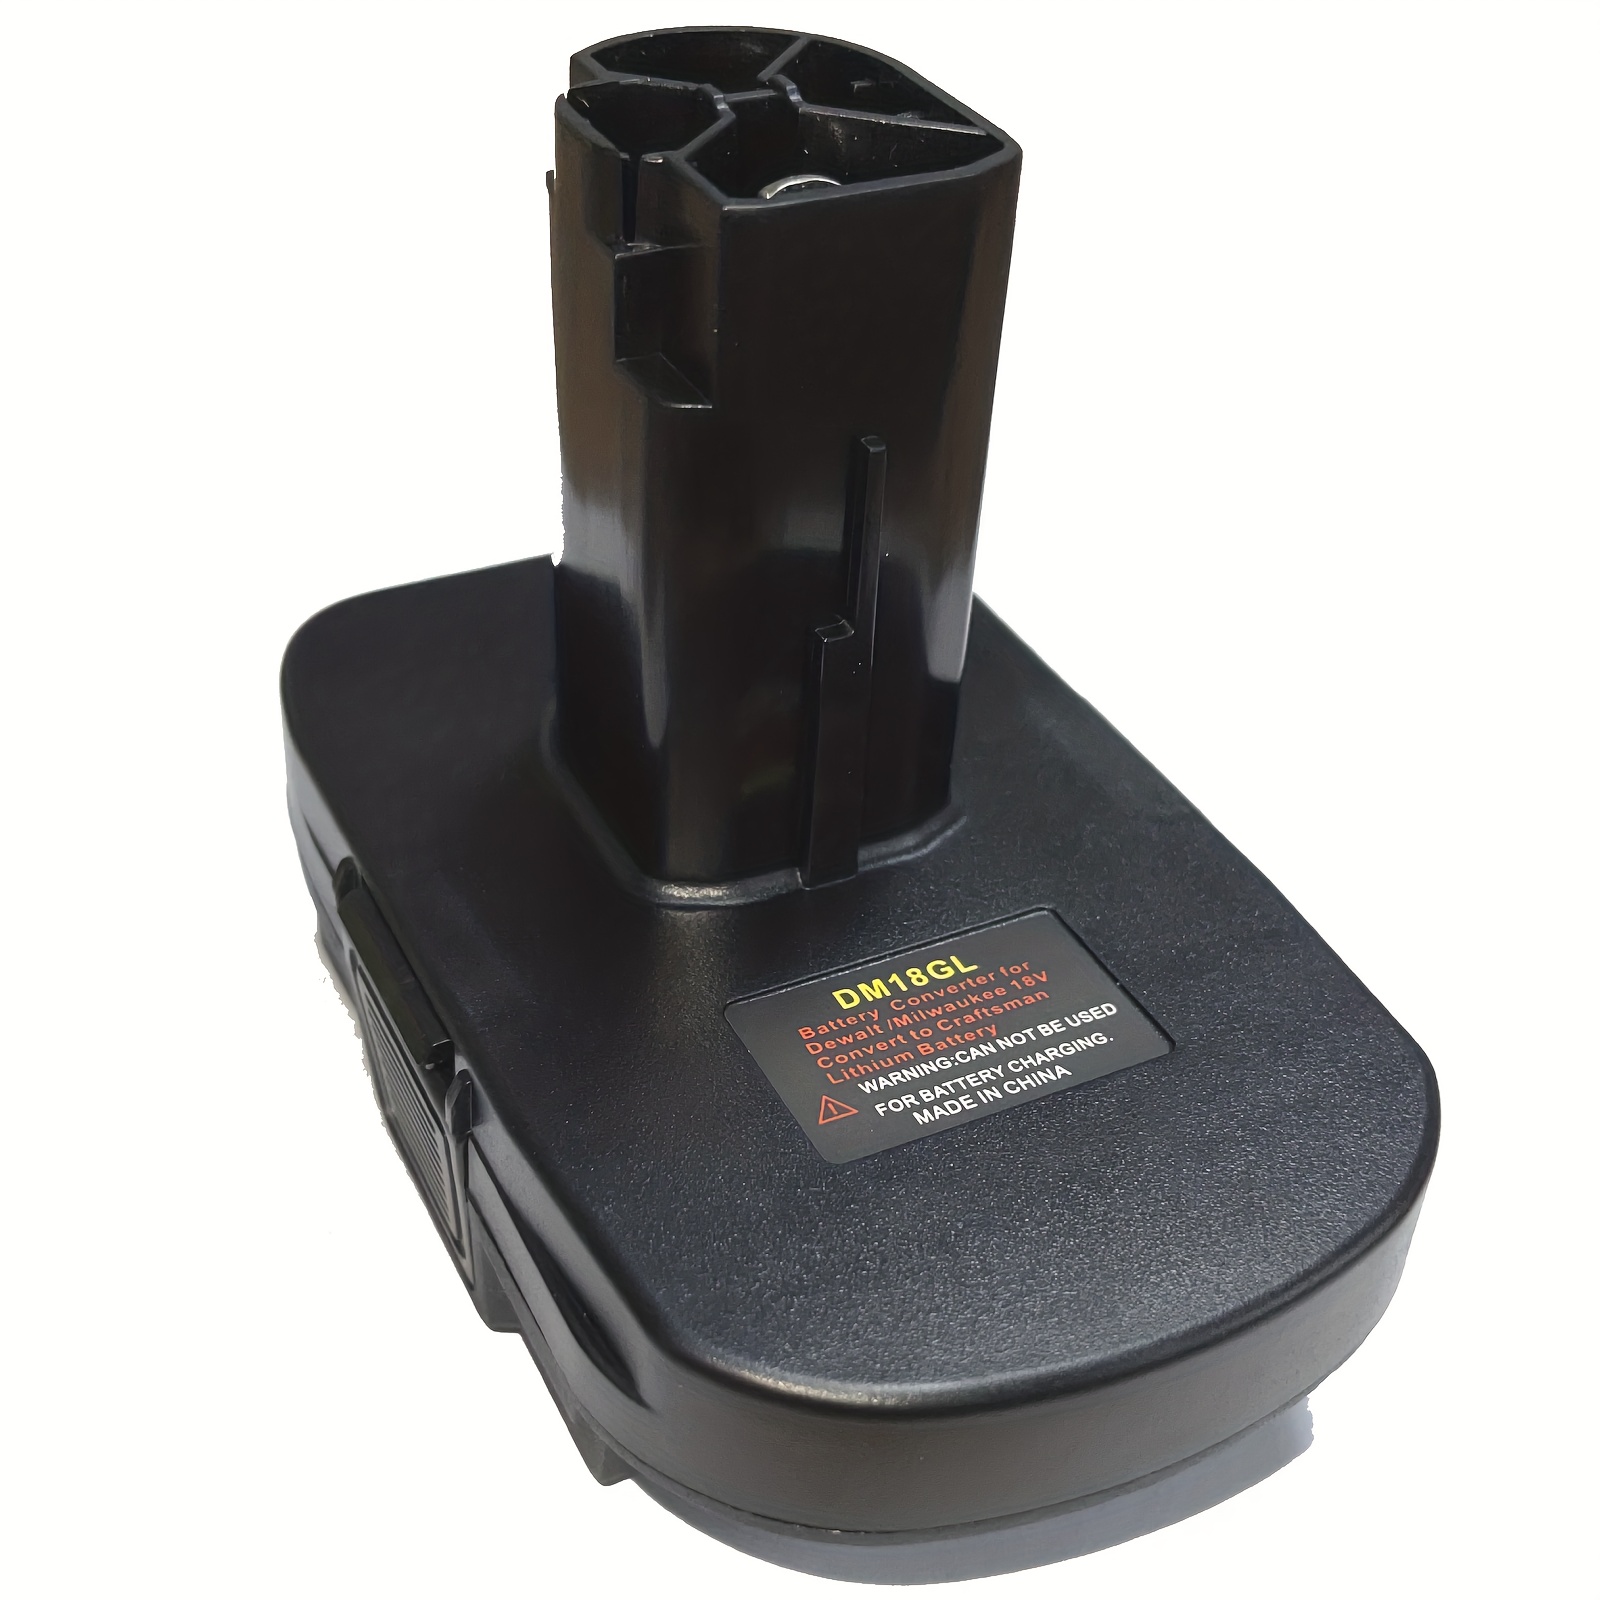 Black and Decker 20V to Craftsman 20V Battery Adapter